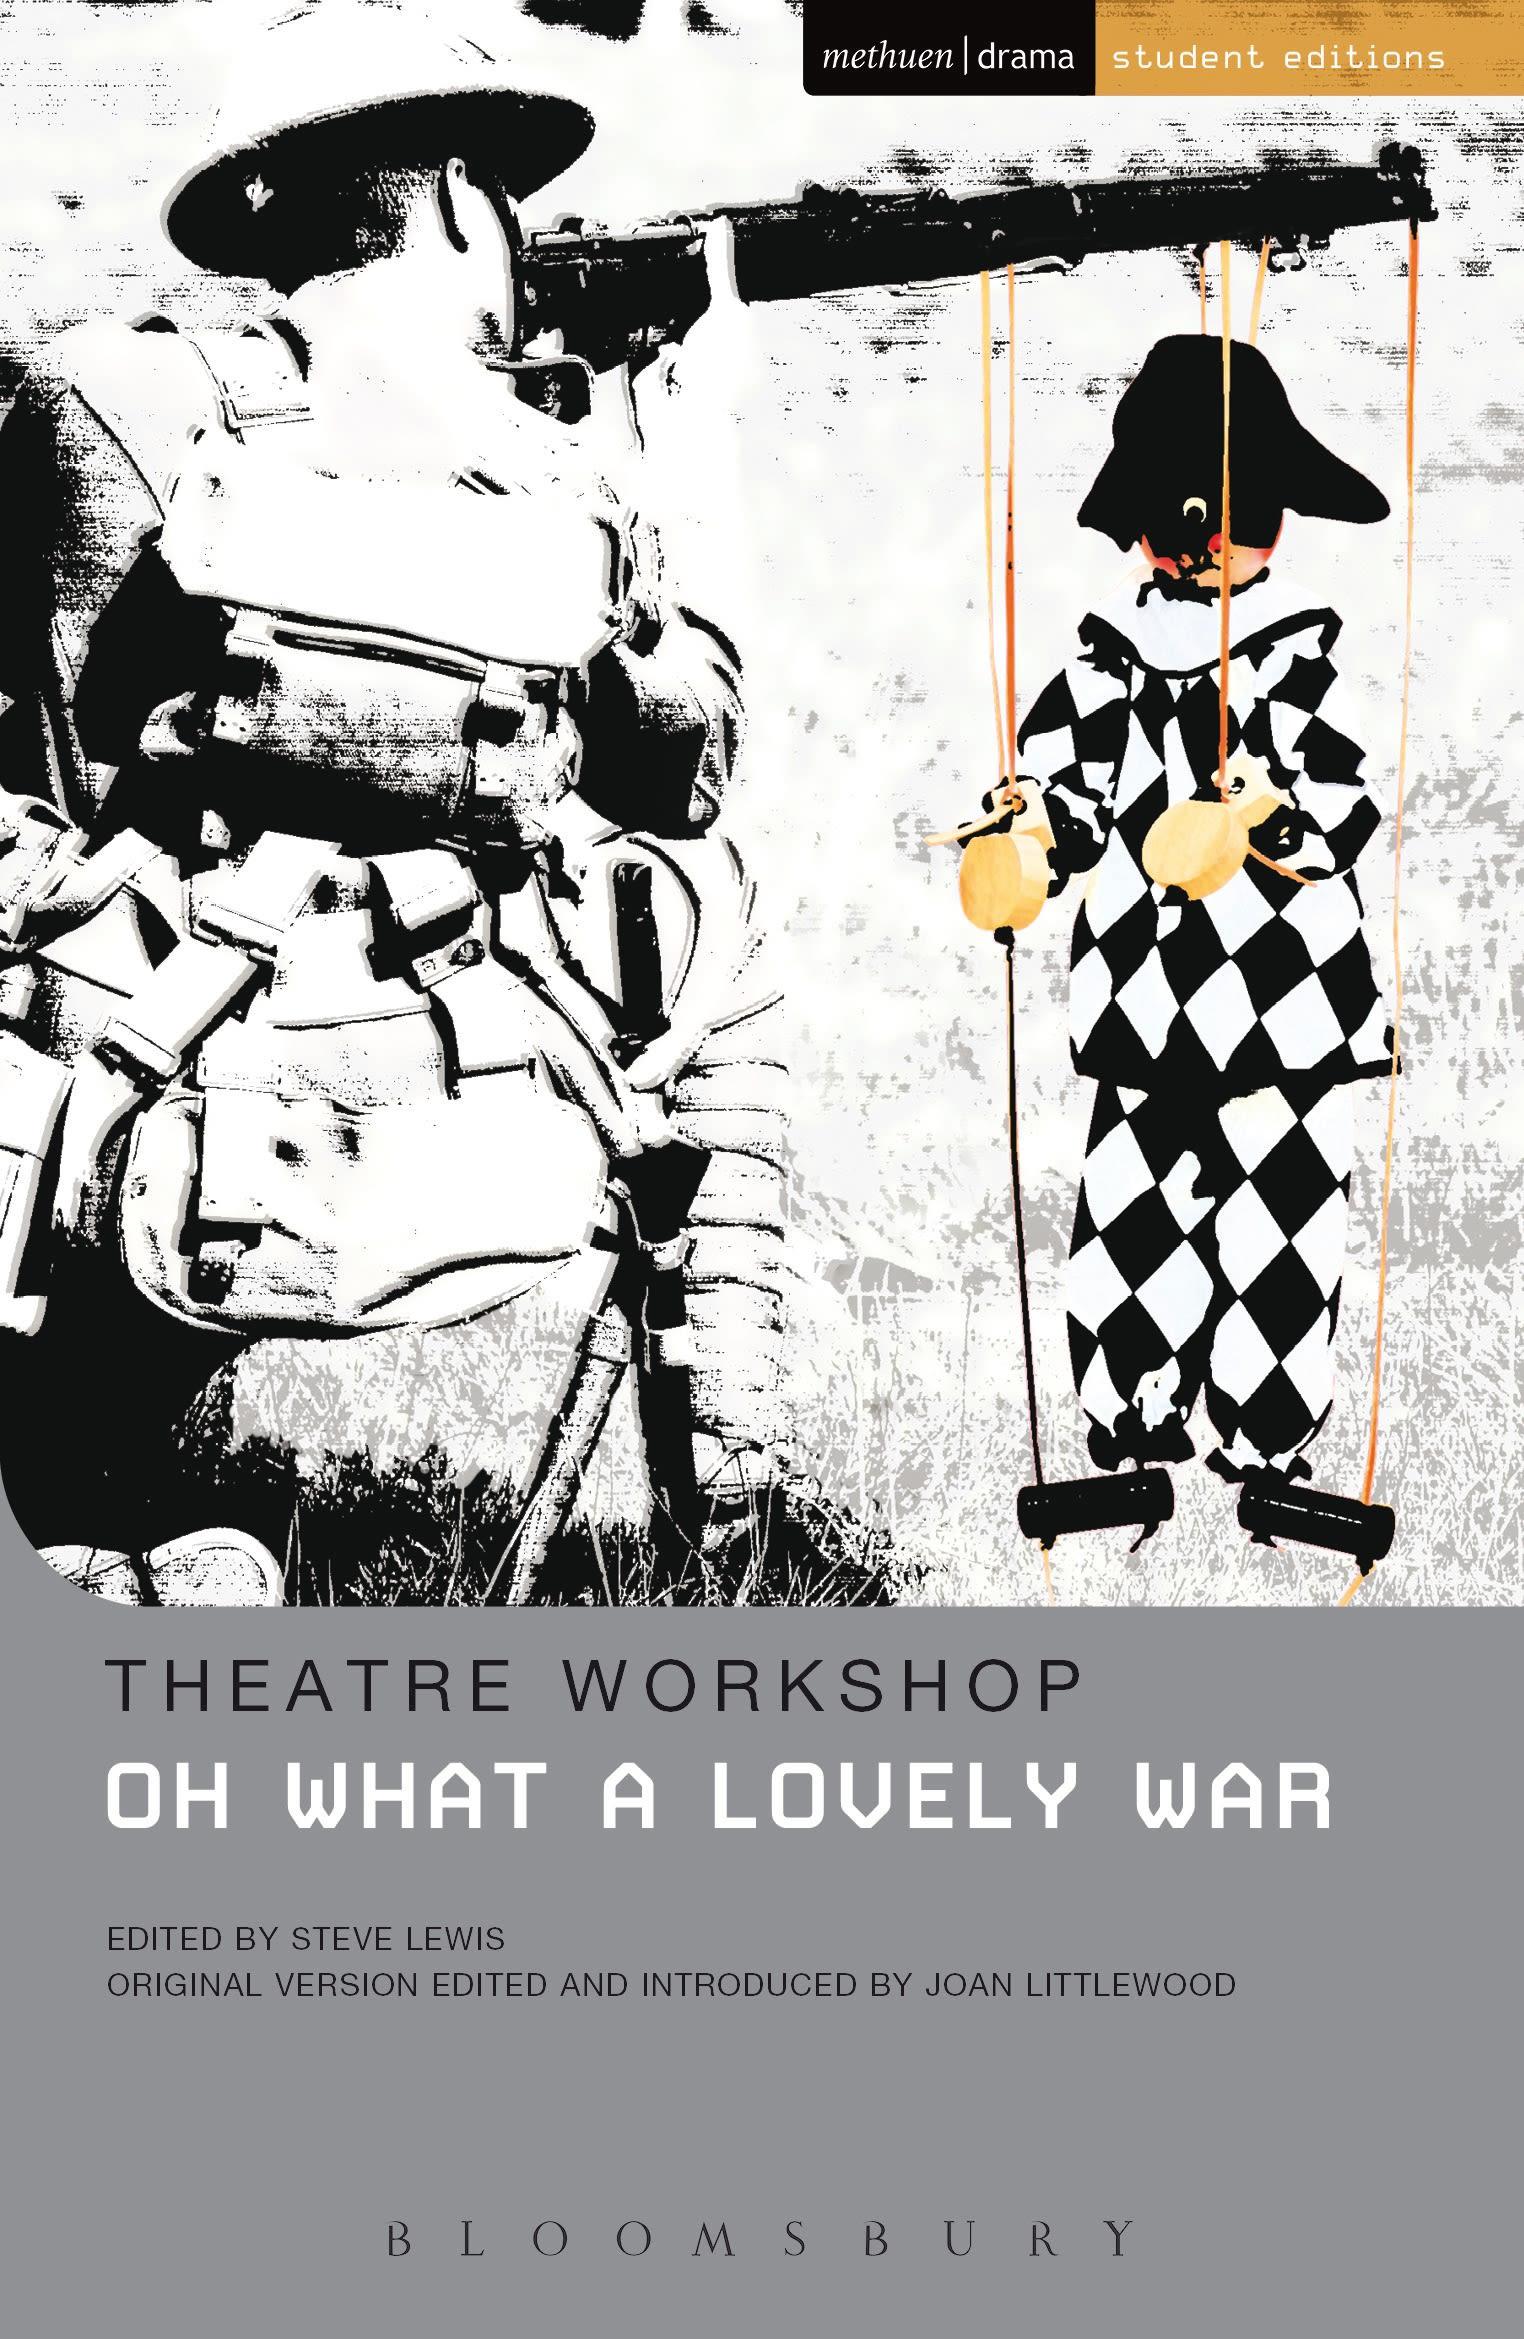 Oh What A Lovely War / Theatre Workshop / Taschenbuch / Student Editions / Englisch / 2006 / Bloomsbury Publishing PLC / EAN 9780413775467 - Theatre Workshop